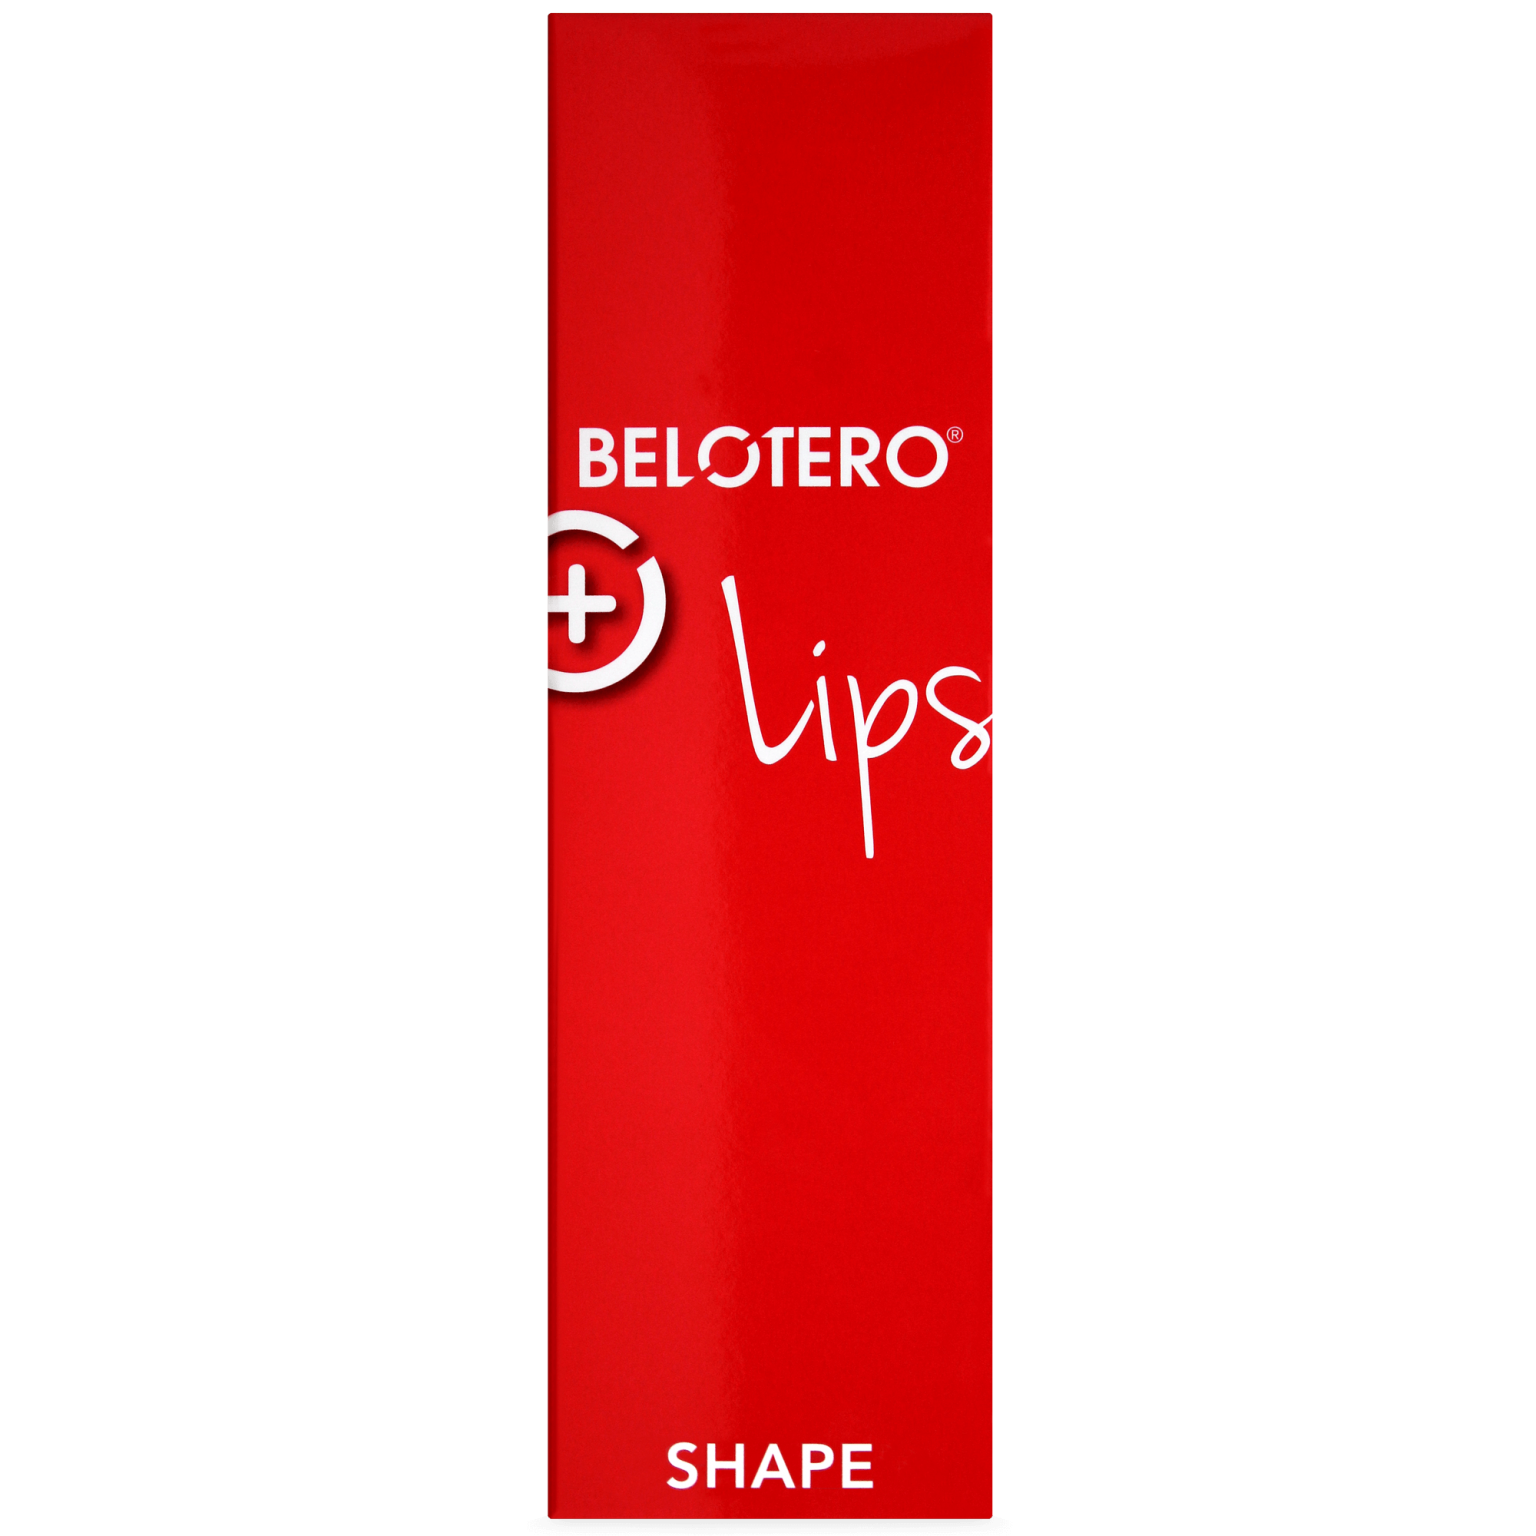 Белотеро Липс Шейп 0.6 мл. Филлер Белотеро Липс. Belotero Lips Shape, 0,6 мл. Belotero Lips Contour 0.6 мл.